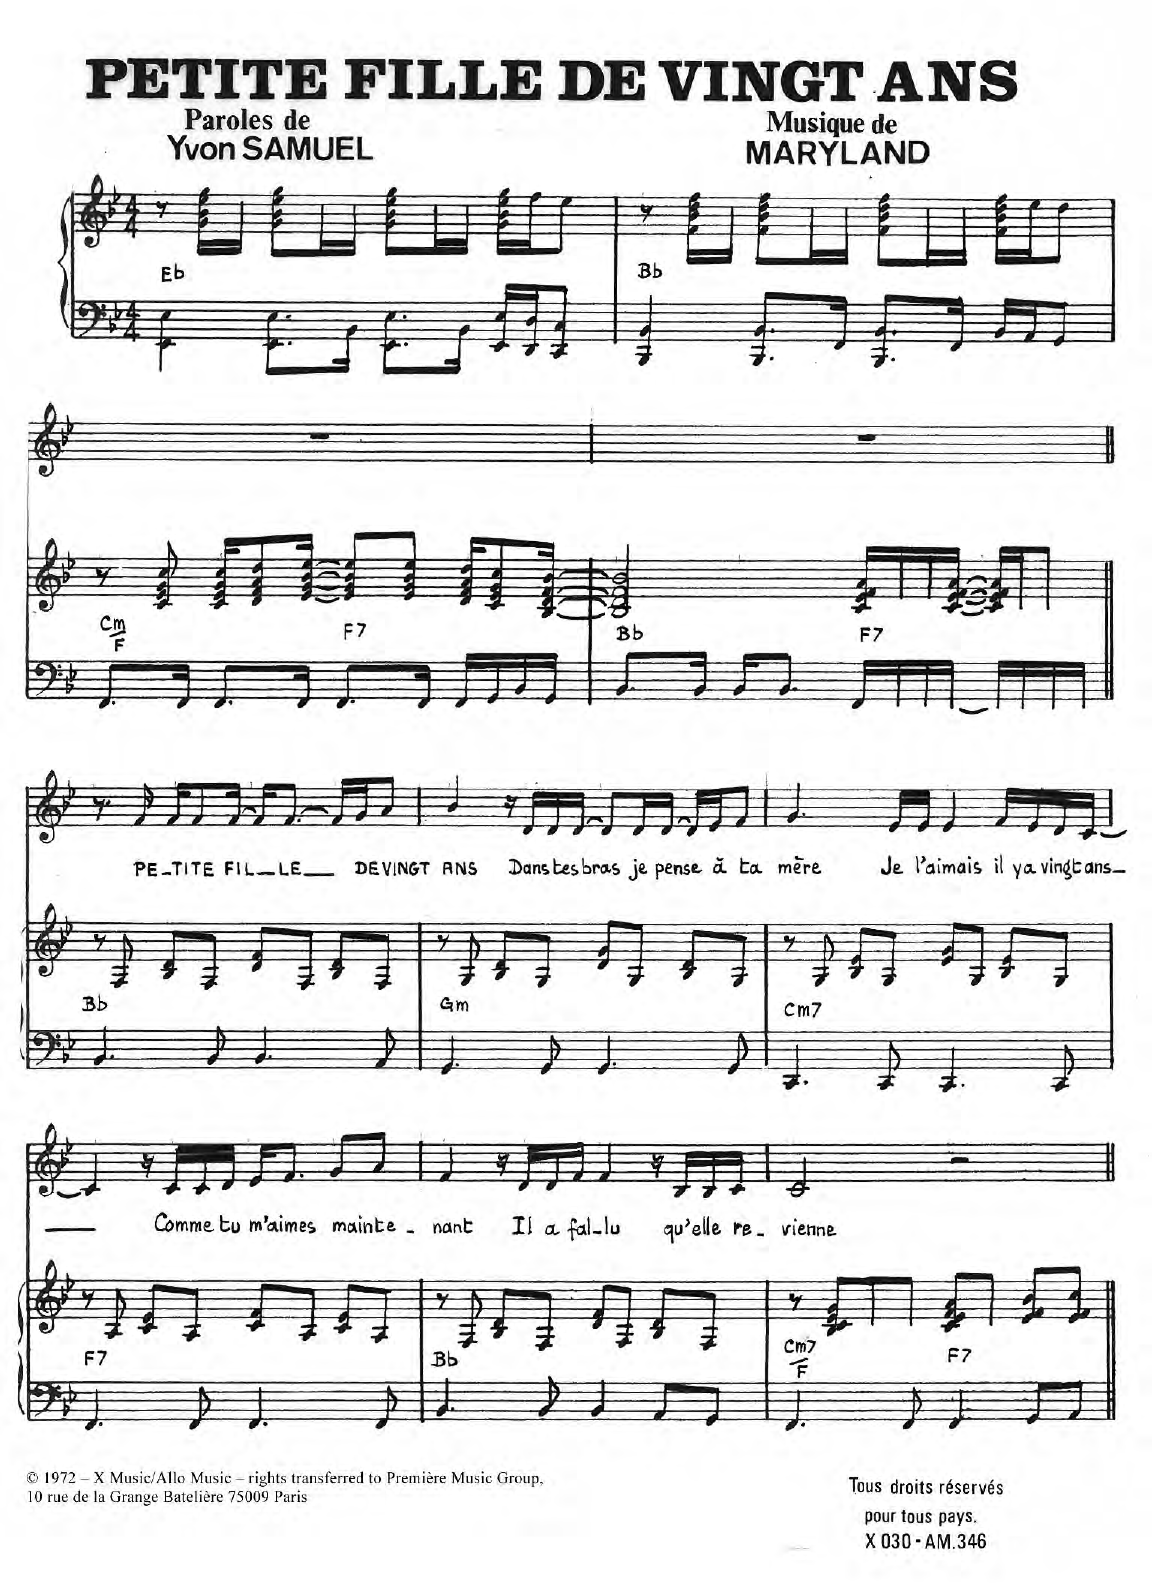 Eddie Constantine Petite Fille De Vingt Ans Sheet Music Notes & Chords for Piano & Vocal - Download or Print PDF